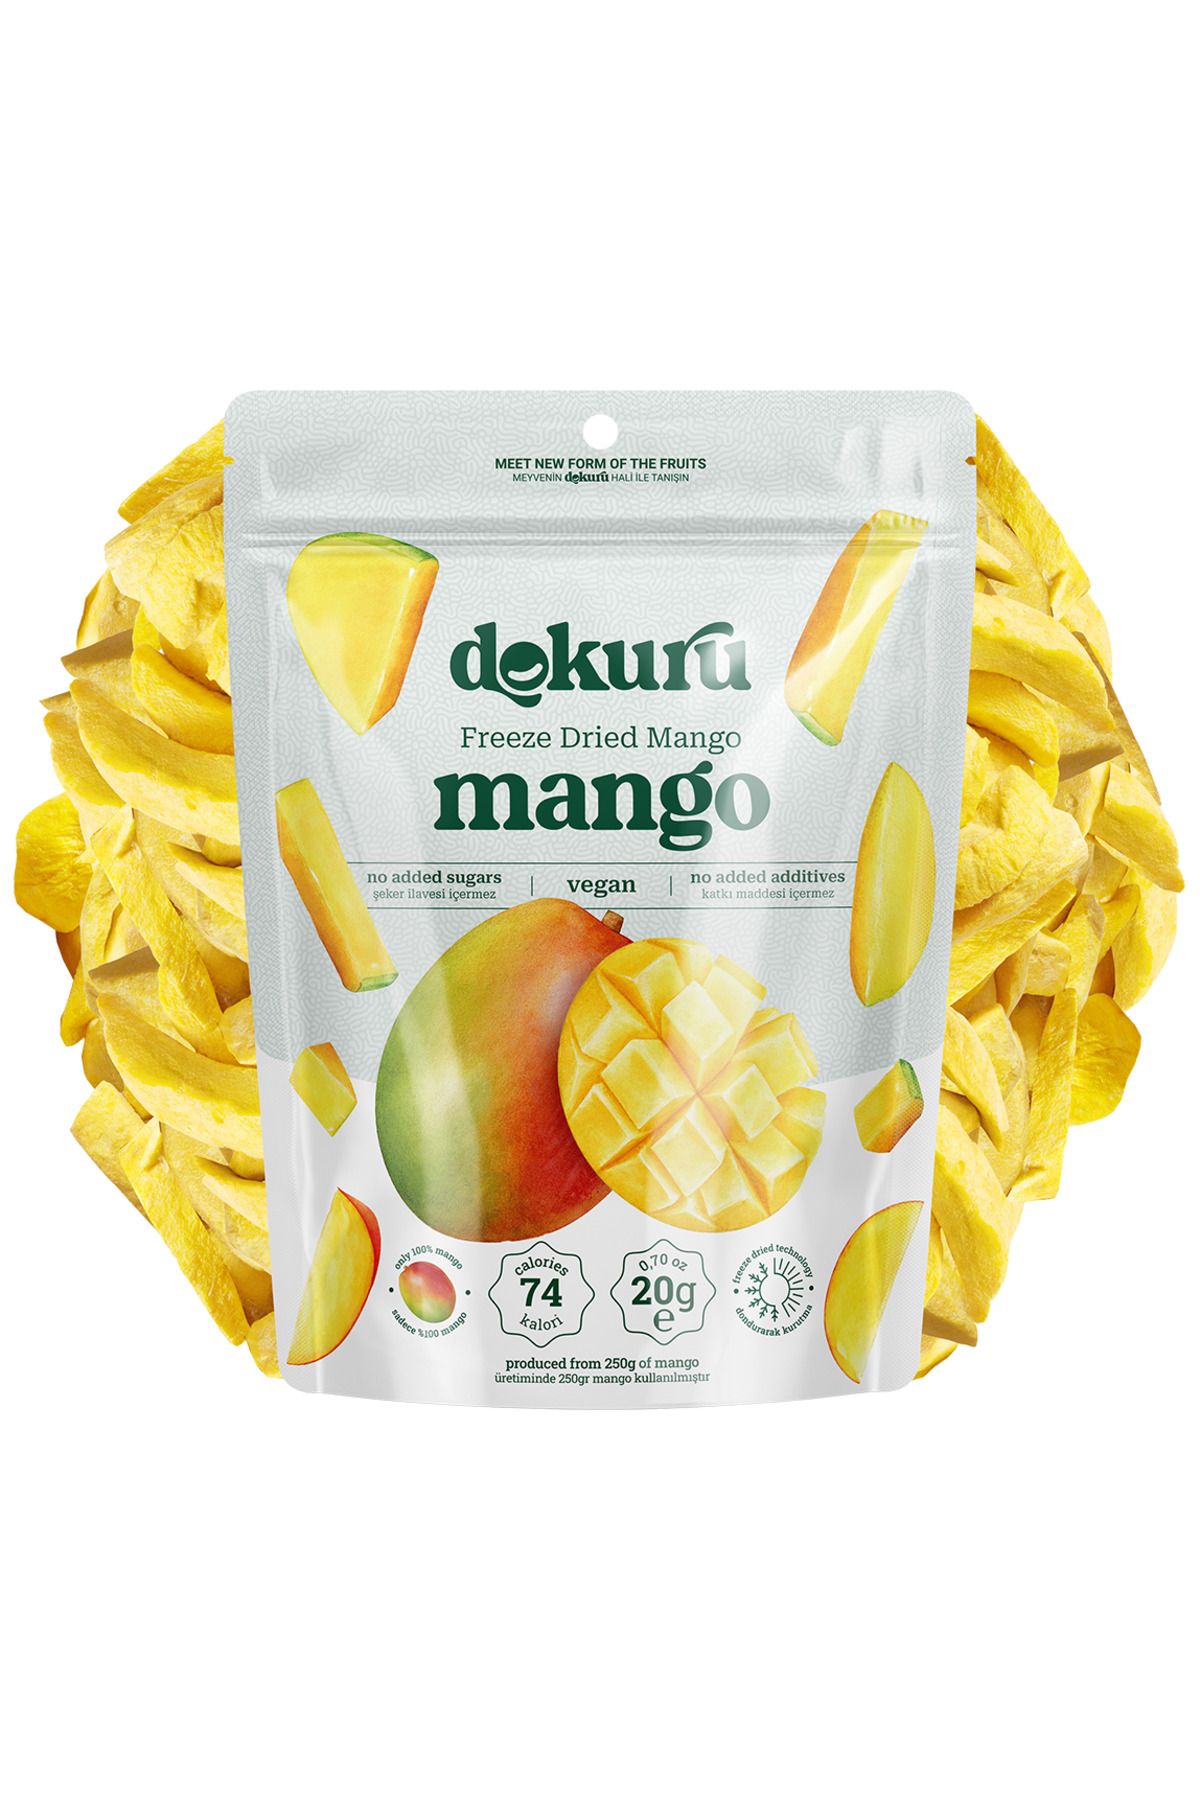 dokuru Mango Kuru Meyve Cipsi - Dondurularak Kurutulmuş Freeze Dried Çıtır Mango